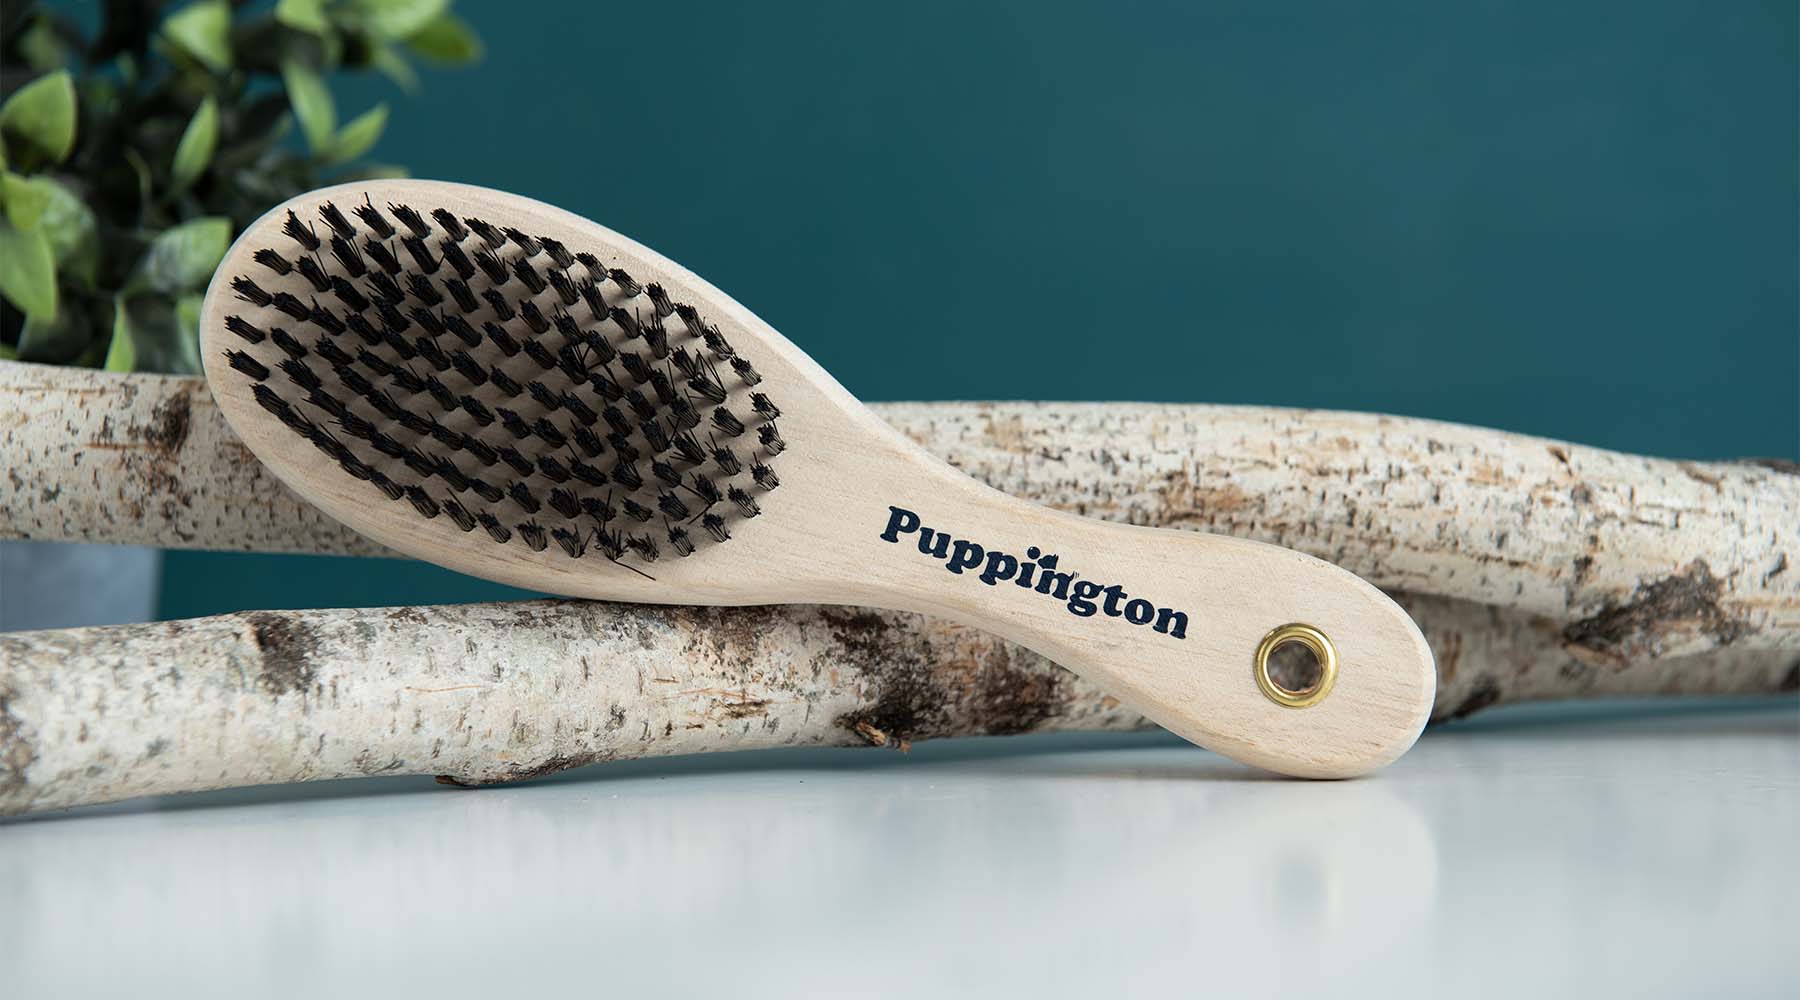 Puppington brush bristle side